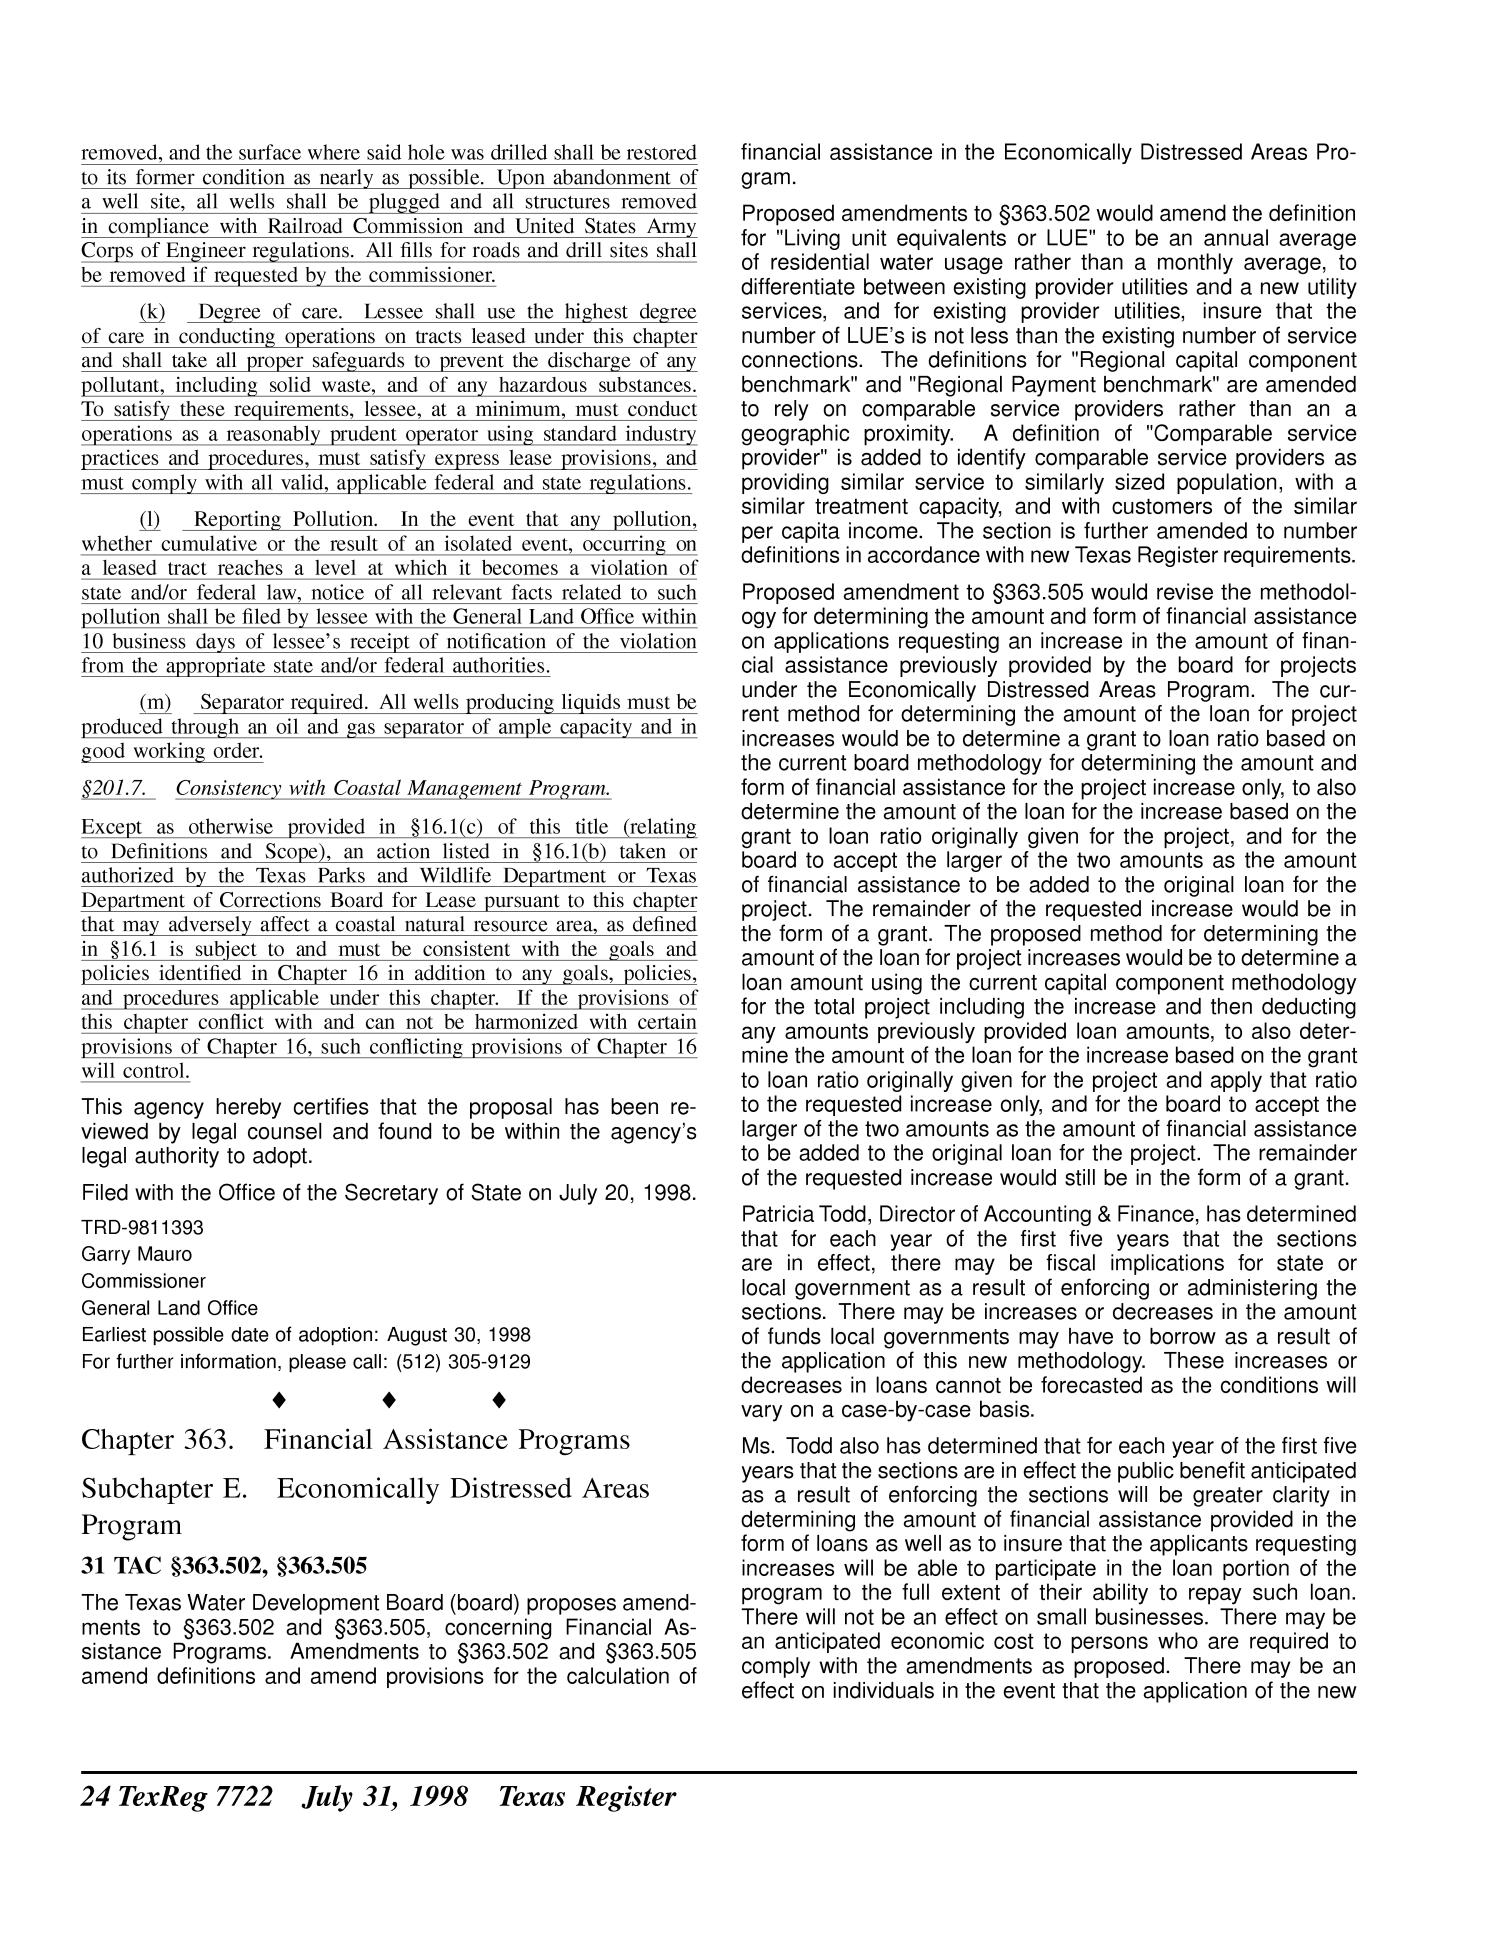 Texas Register, Volume 23, Number 31, Pages 7663-7938, July 31, 1998
                                                
                                                    7722
                                                